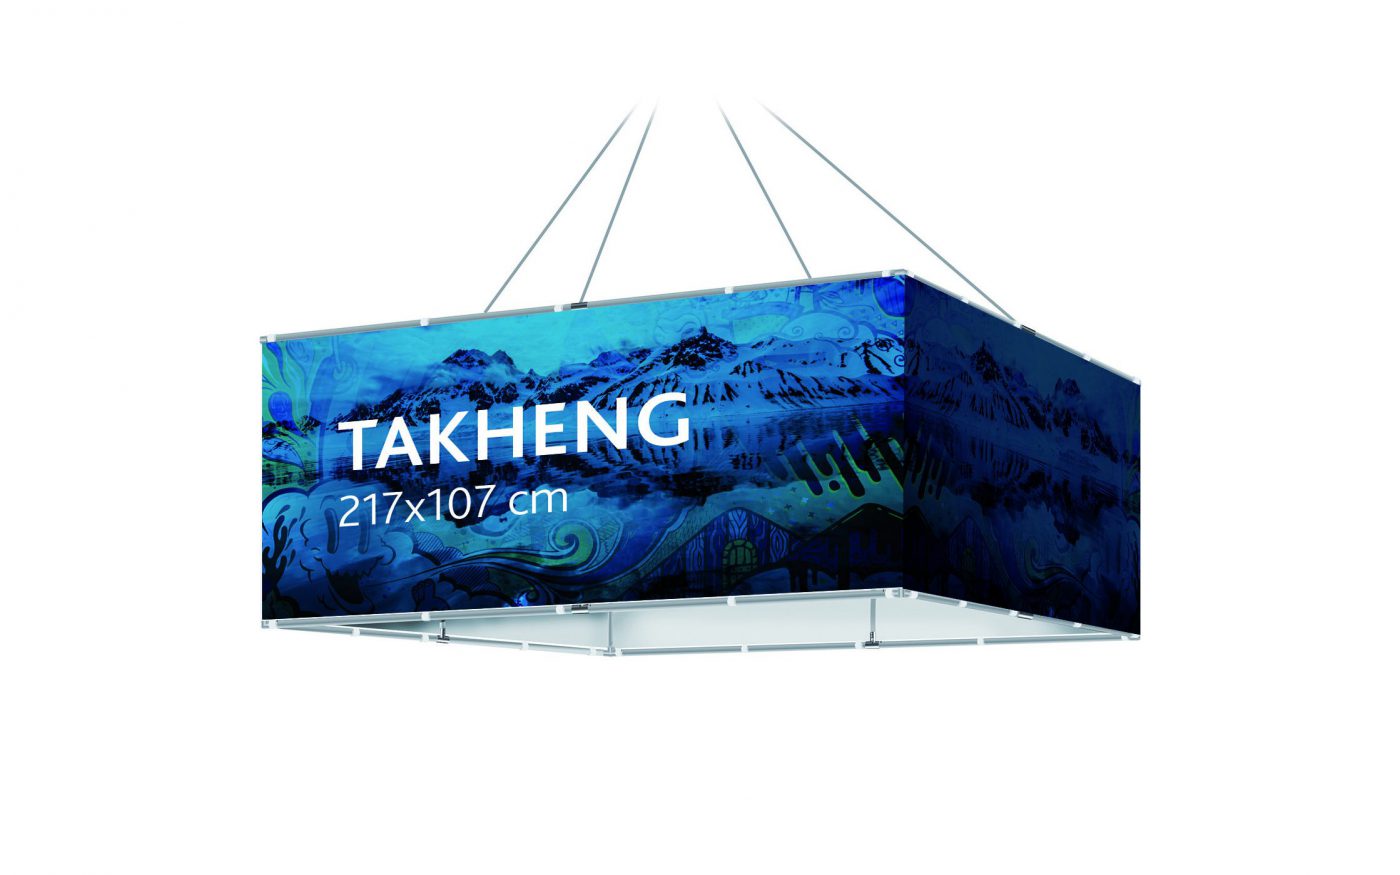 Takheng/takdisplay